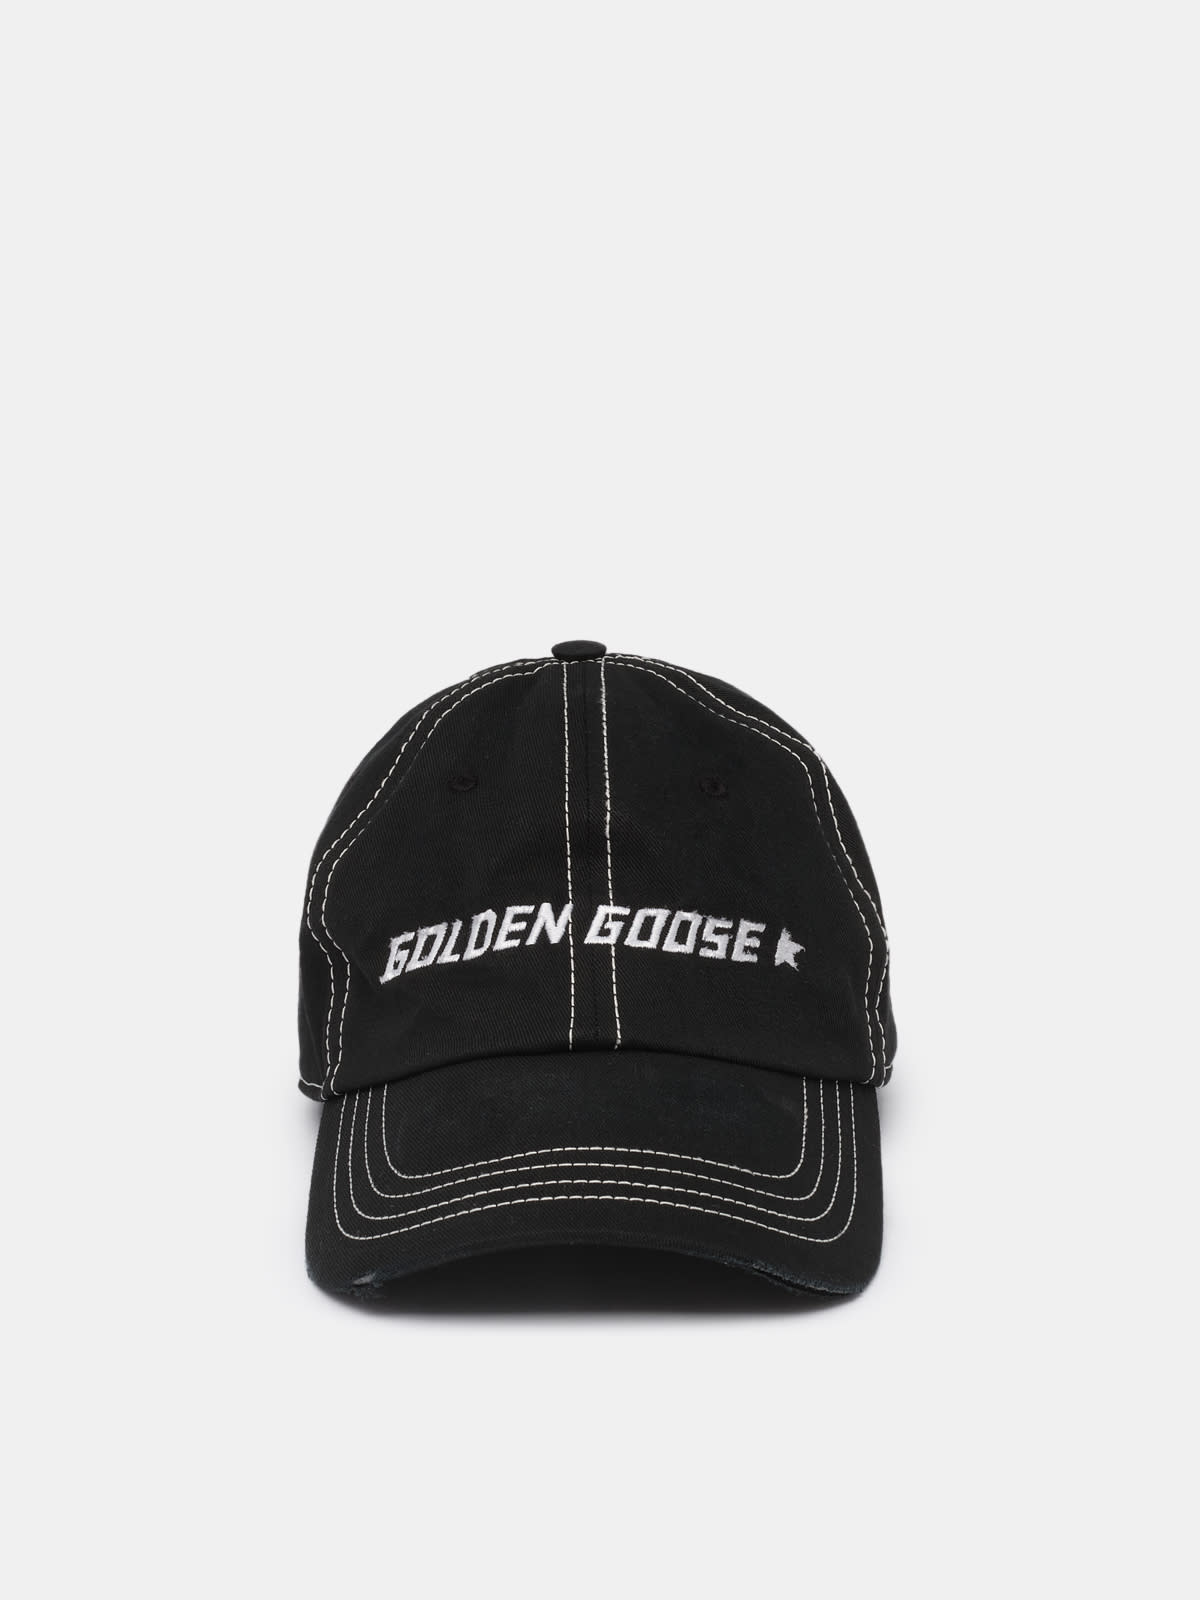 Golden Goose - Aden black baseball cap with contrasting logo in 